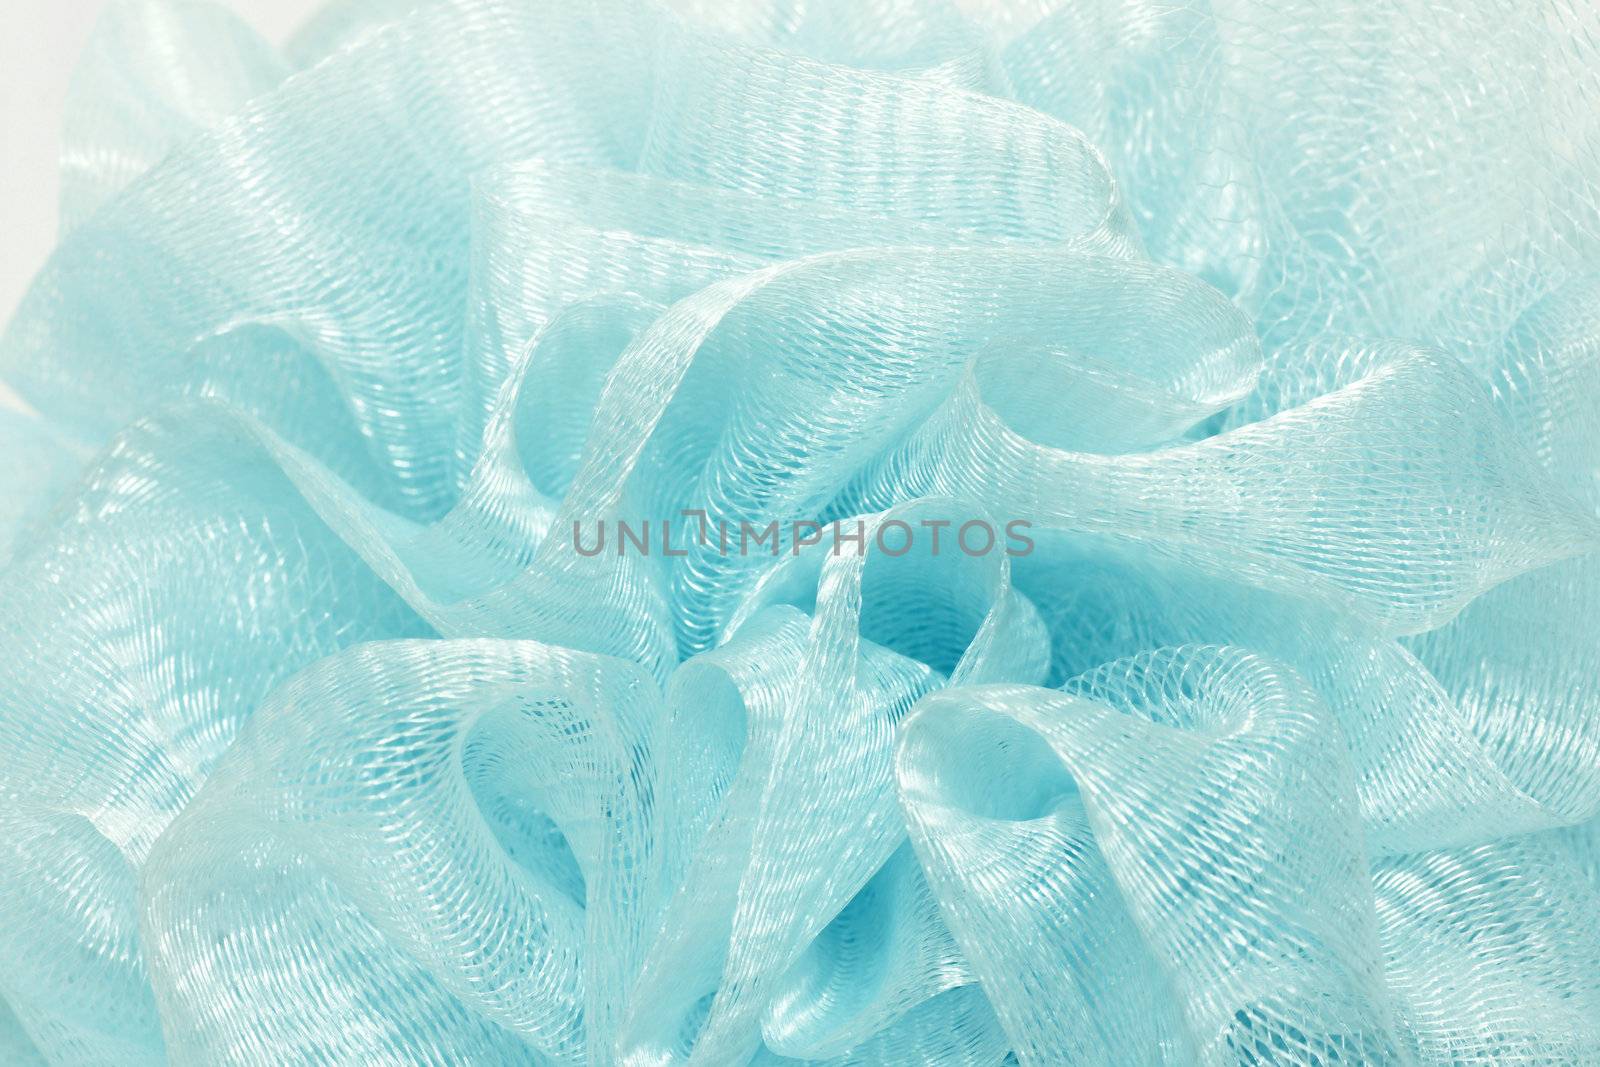 Textured background of blue bath puff by Mirage3